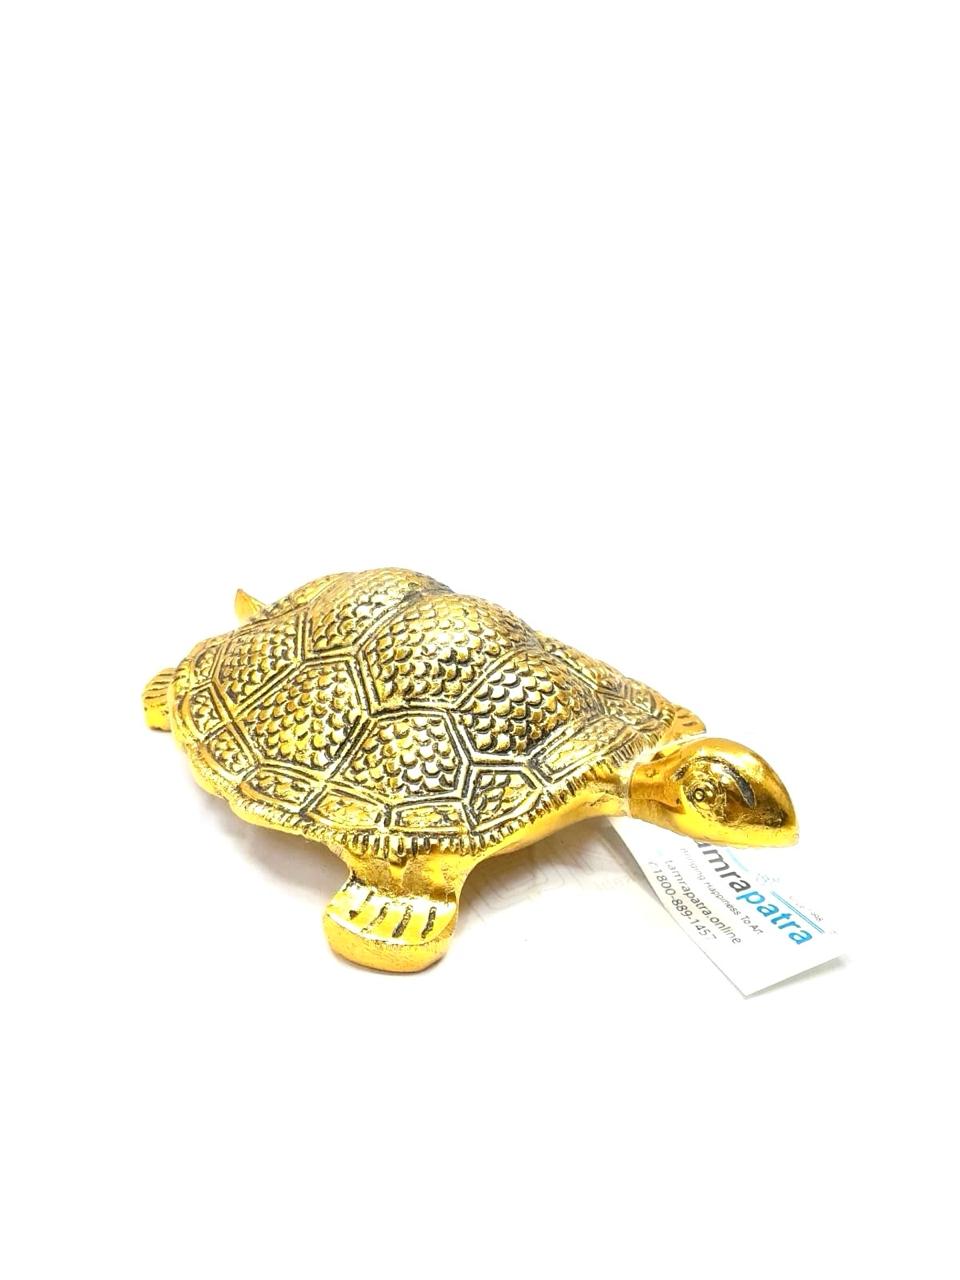 Tortoise Metal Vastu Lucky Gifting Handicrafts Pooja Accessories Available Tamrapatra